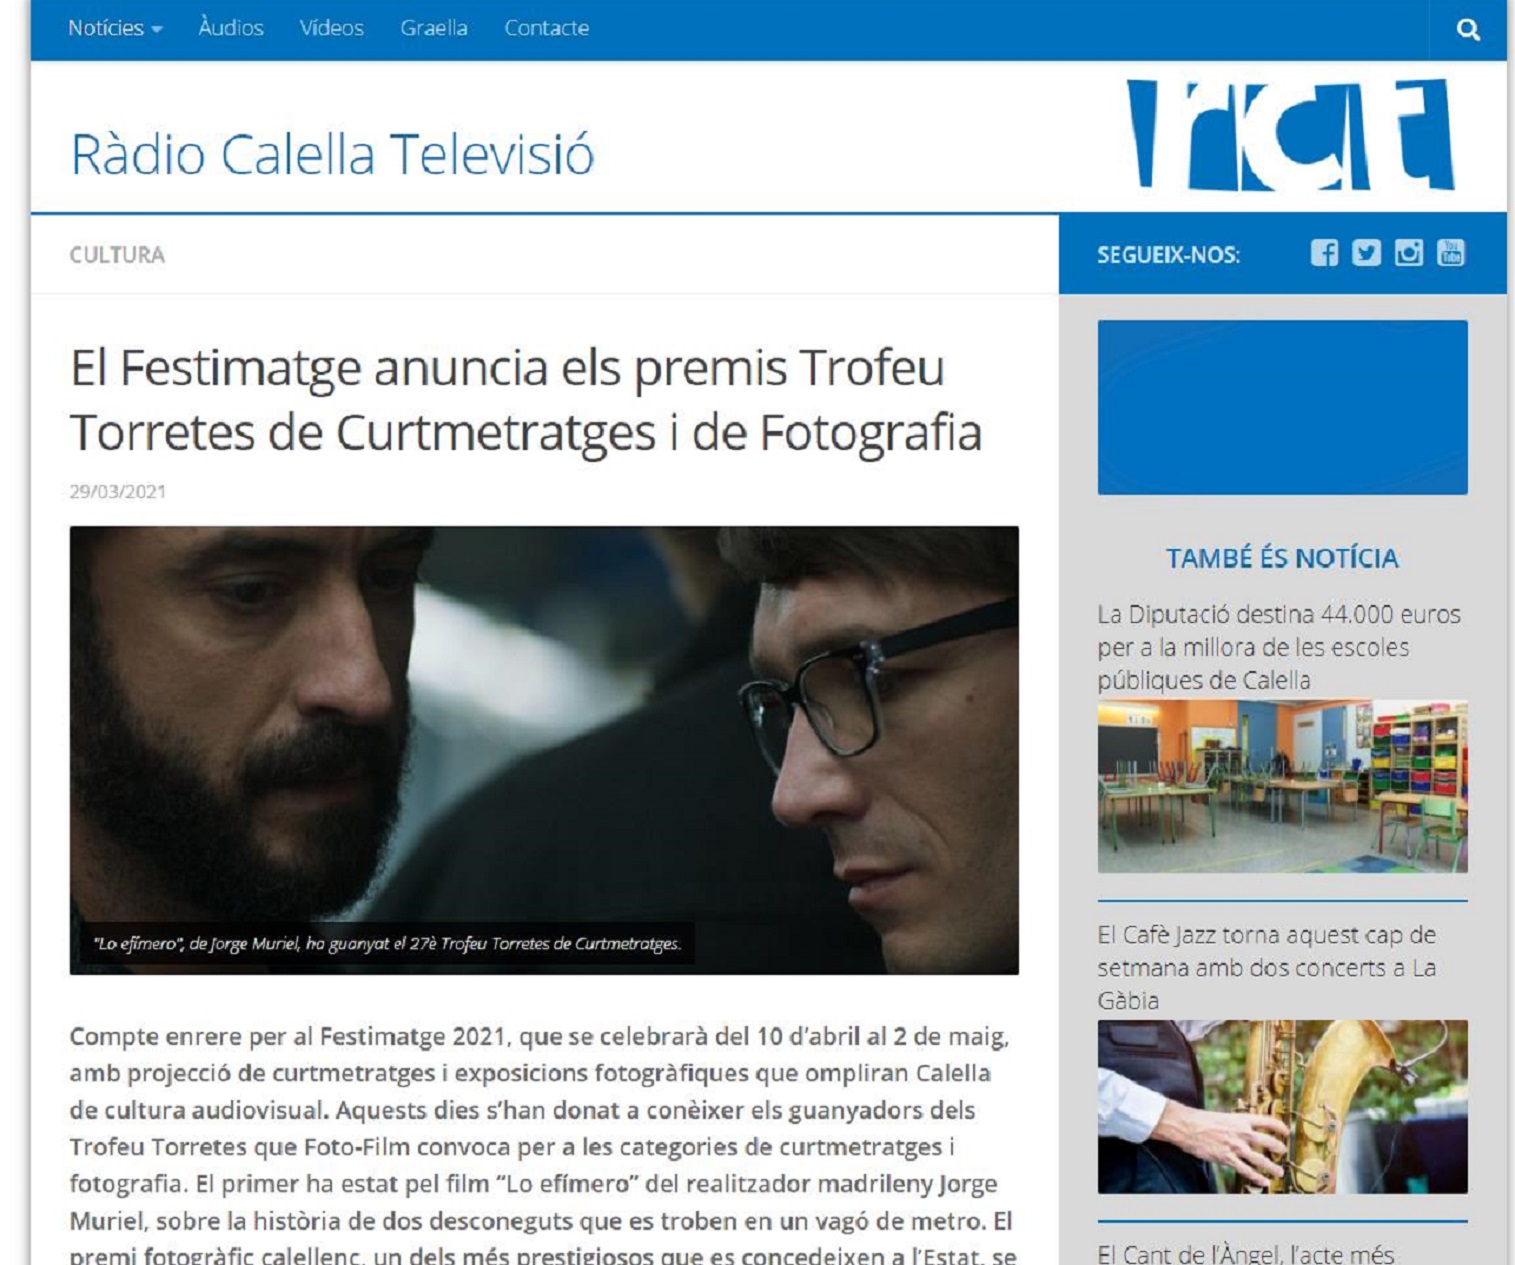 FESTIMATGE, a Ràdio Calella TV-29/03/2021 gabinete de prensa